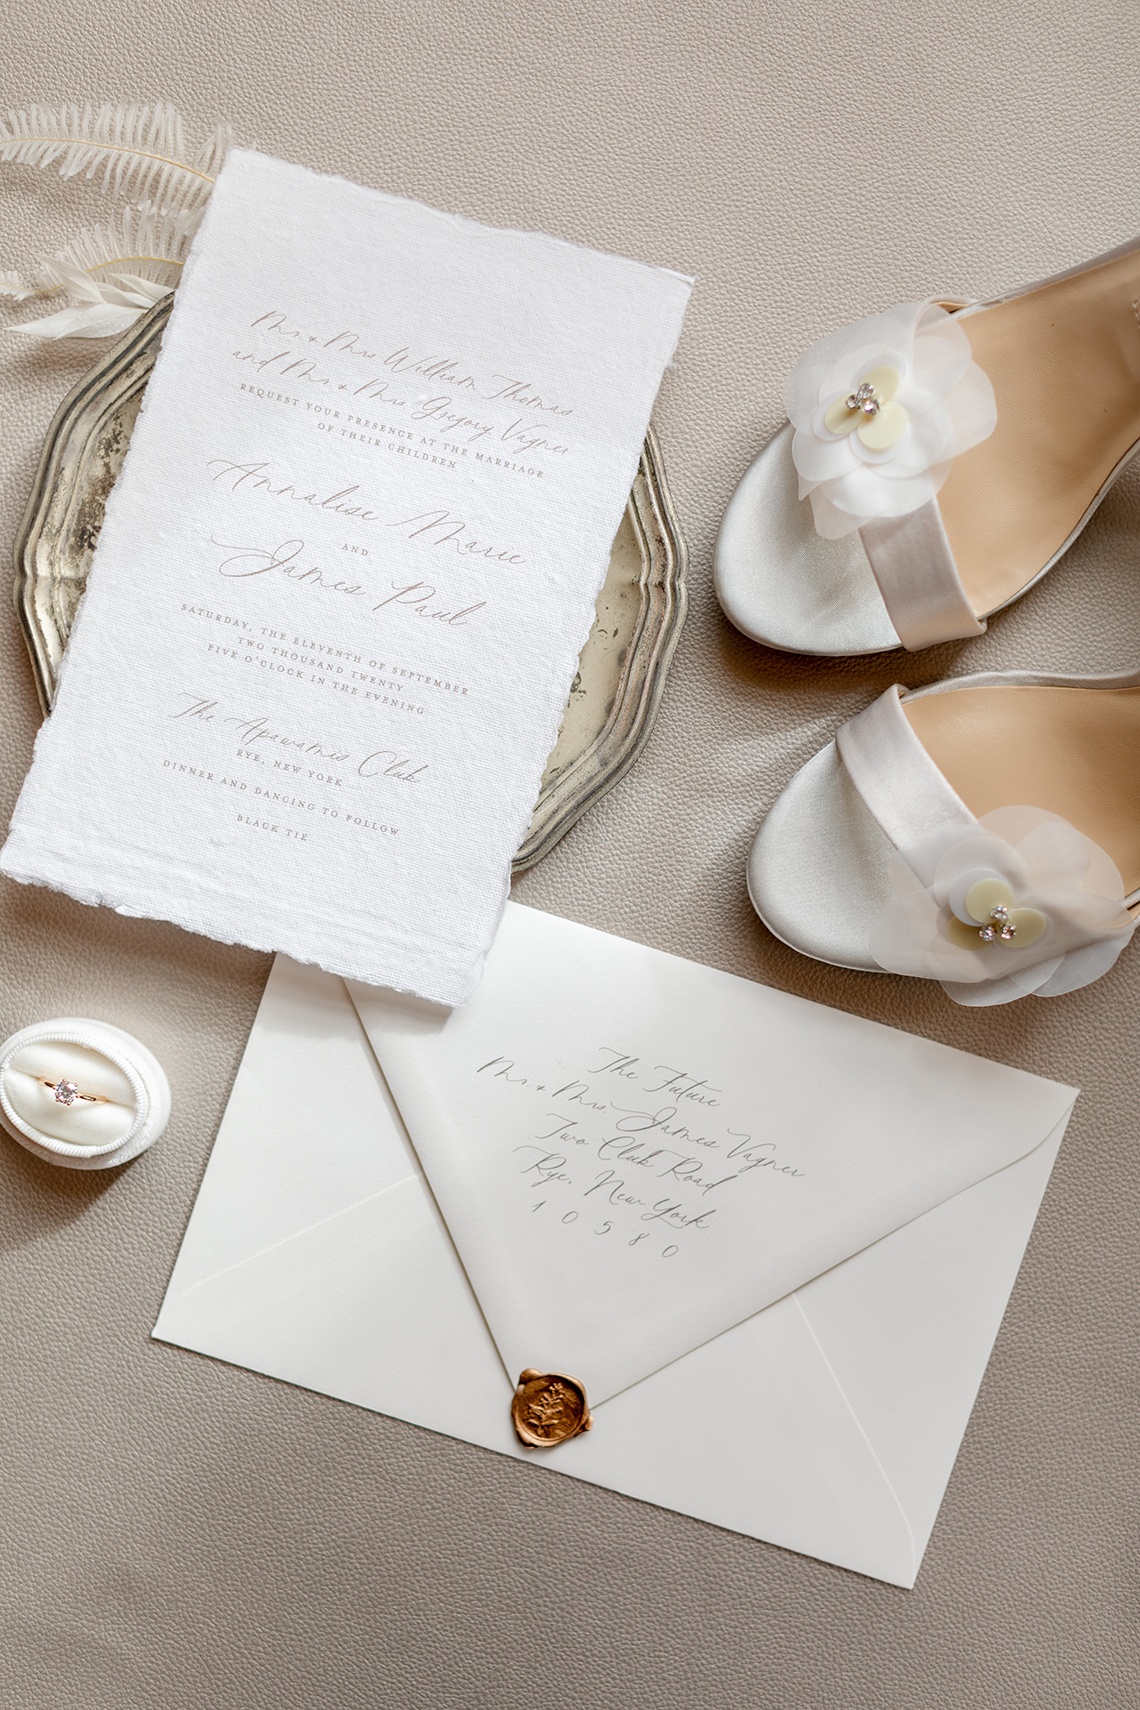 Modern and White Wedding Inspiration – Mandy Forlenza Sticos – Siobhan Stanton Photography – Amsale 1